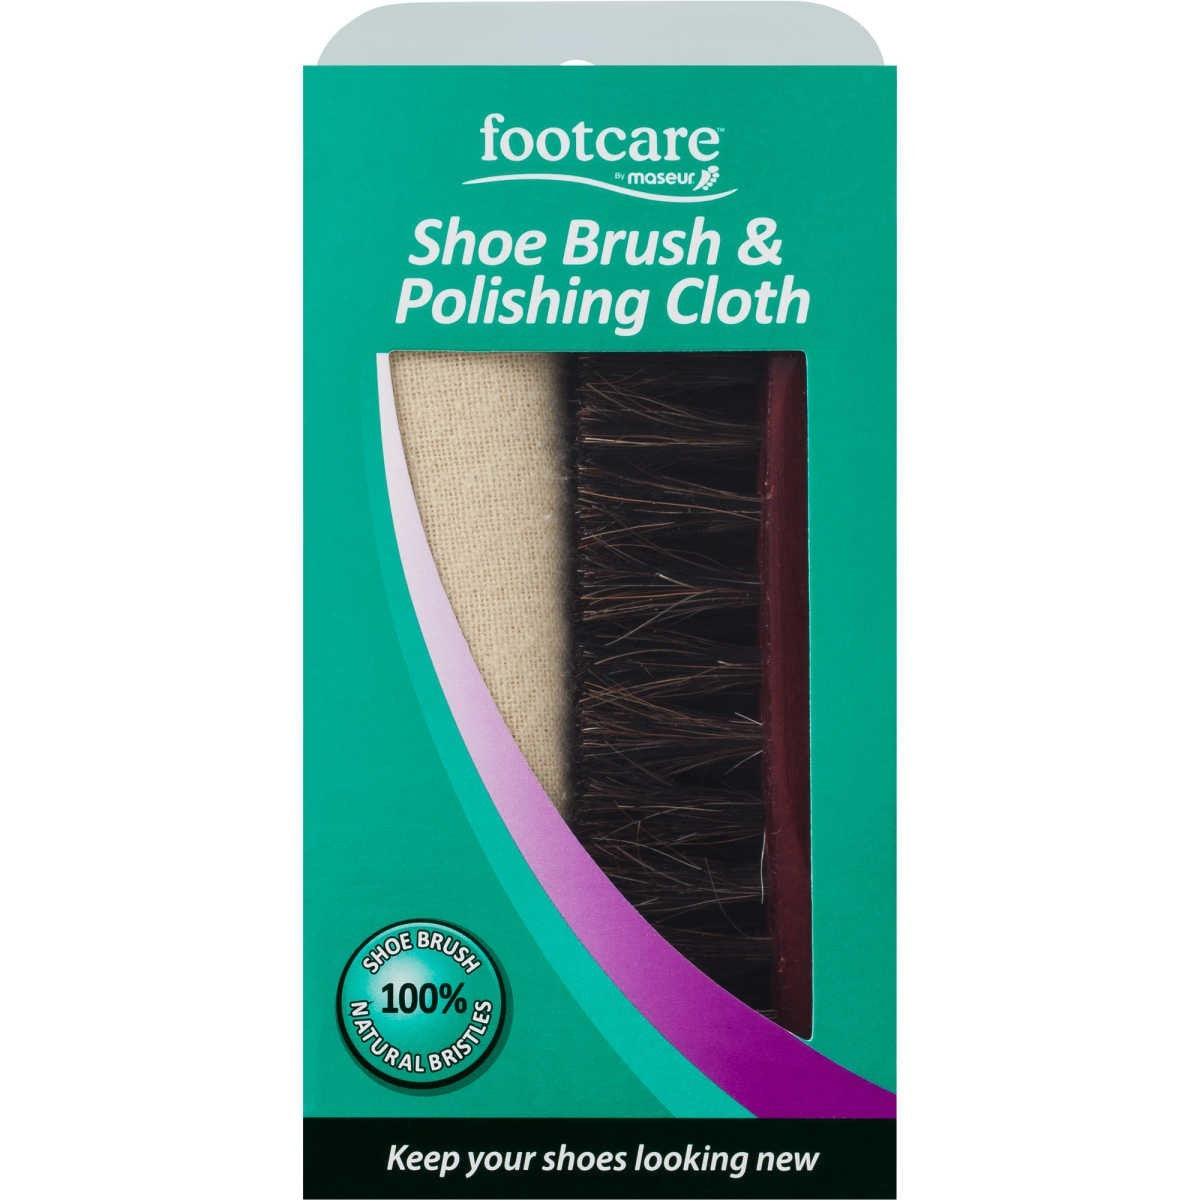 Footcare Shoe Brush & Polishing Cloth